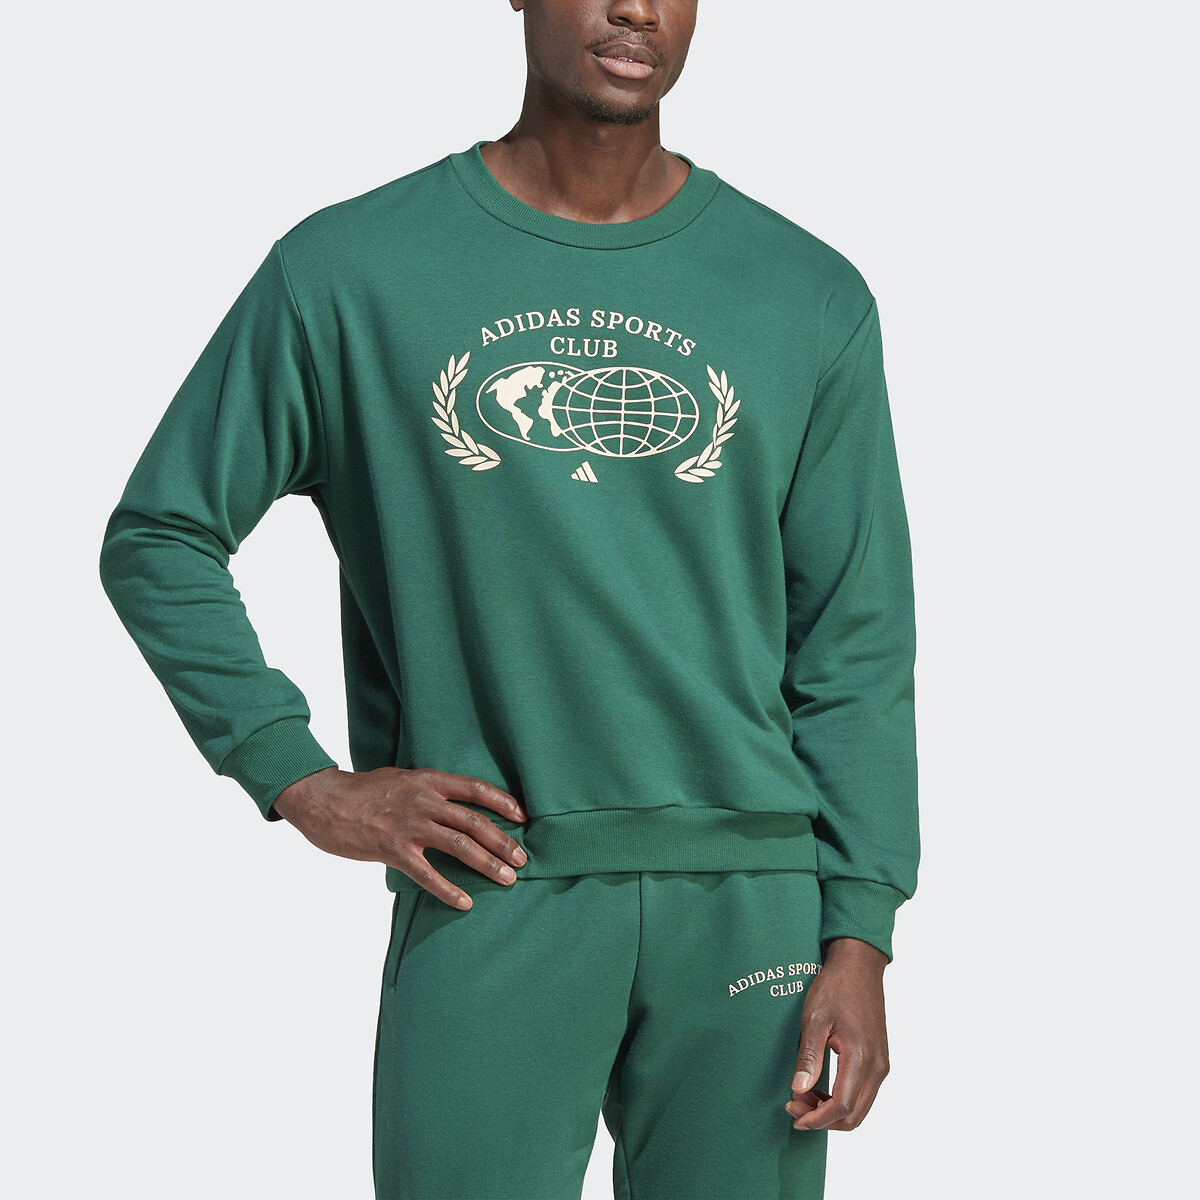 Sports Club Printed Sweatshirt in Cotton Mix